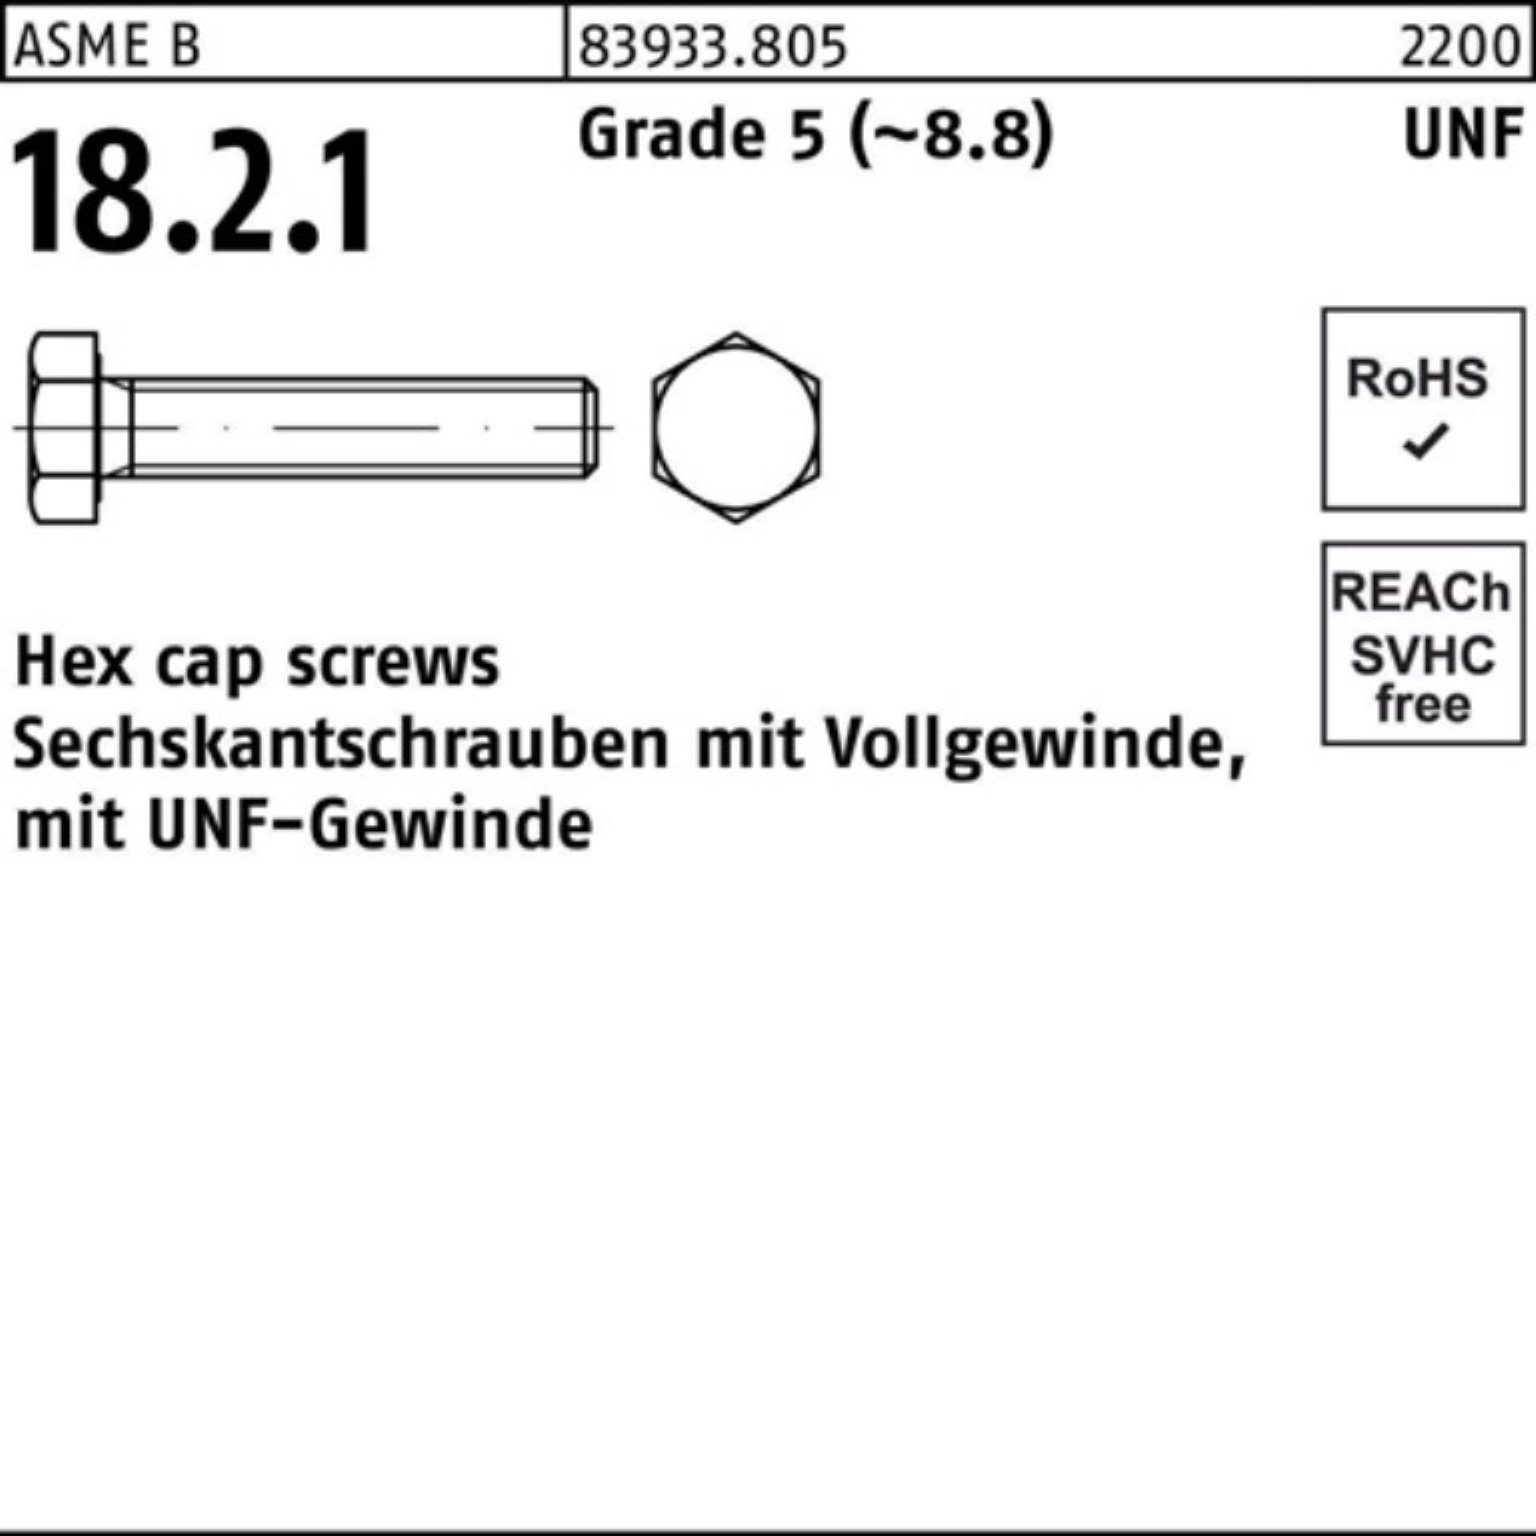 Reyher Sechskantschraube 100er Pack Sechskantschraube R 83933 UNF-Gewinde VG 5/8x 2 Grade 5 (8